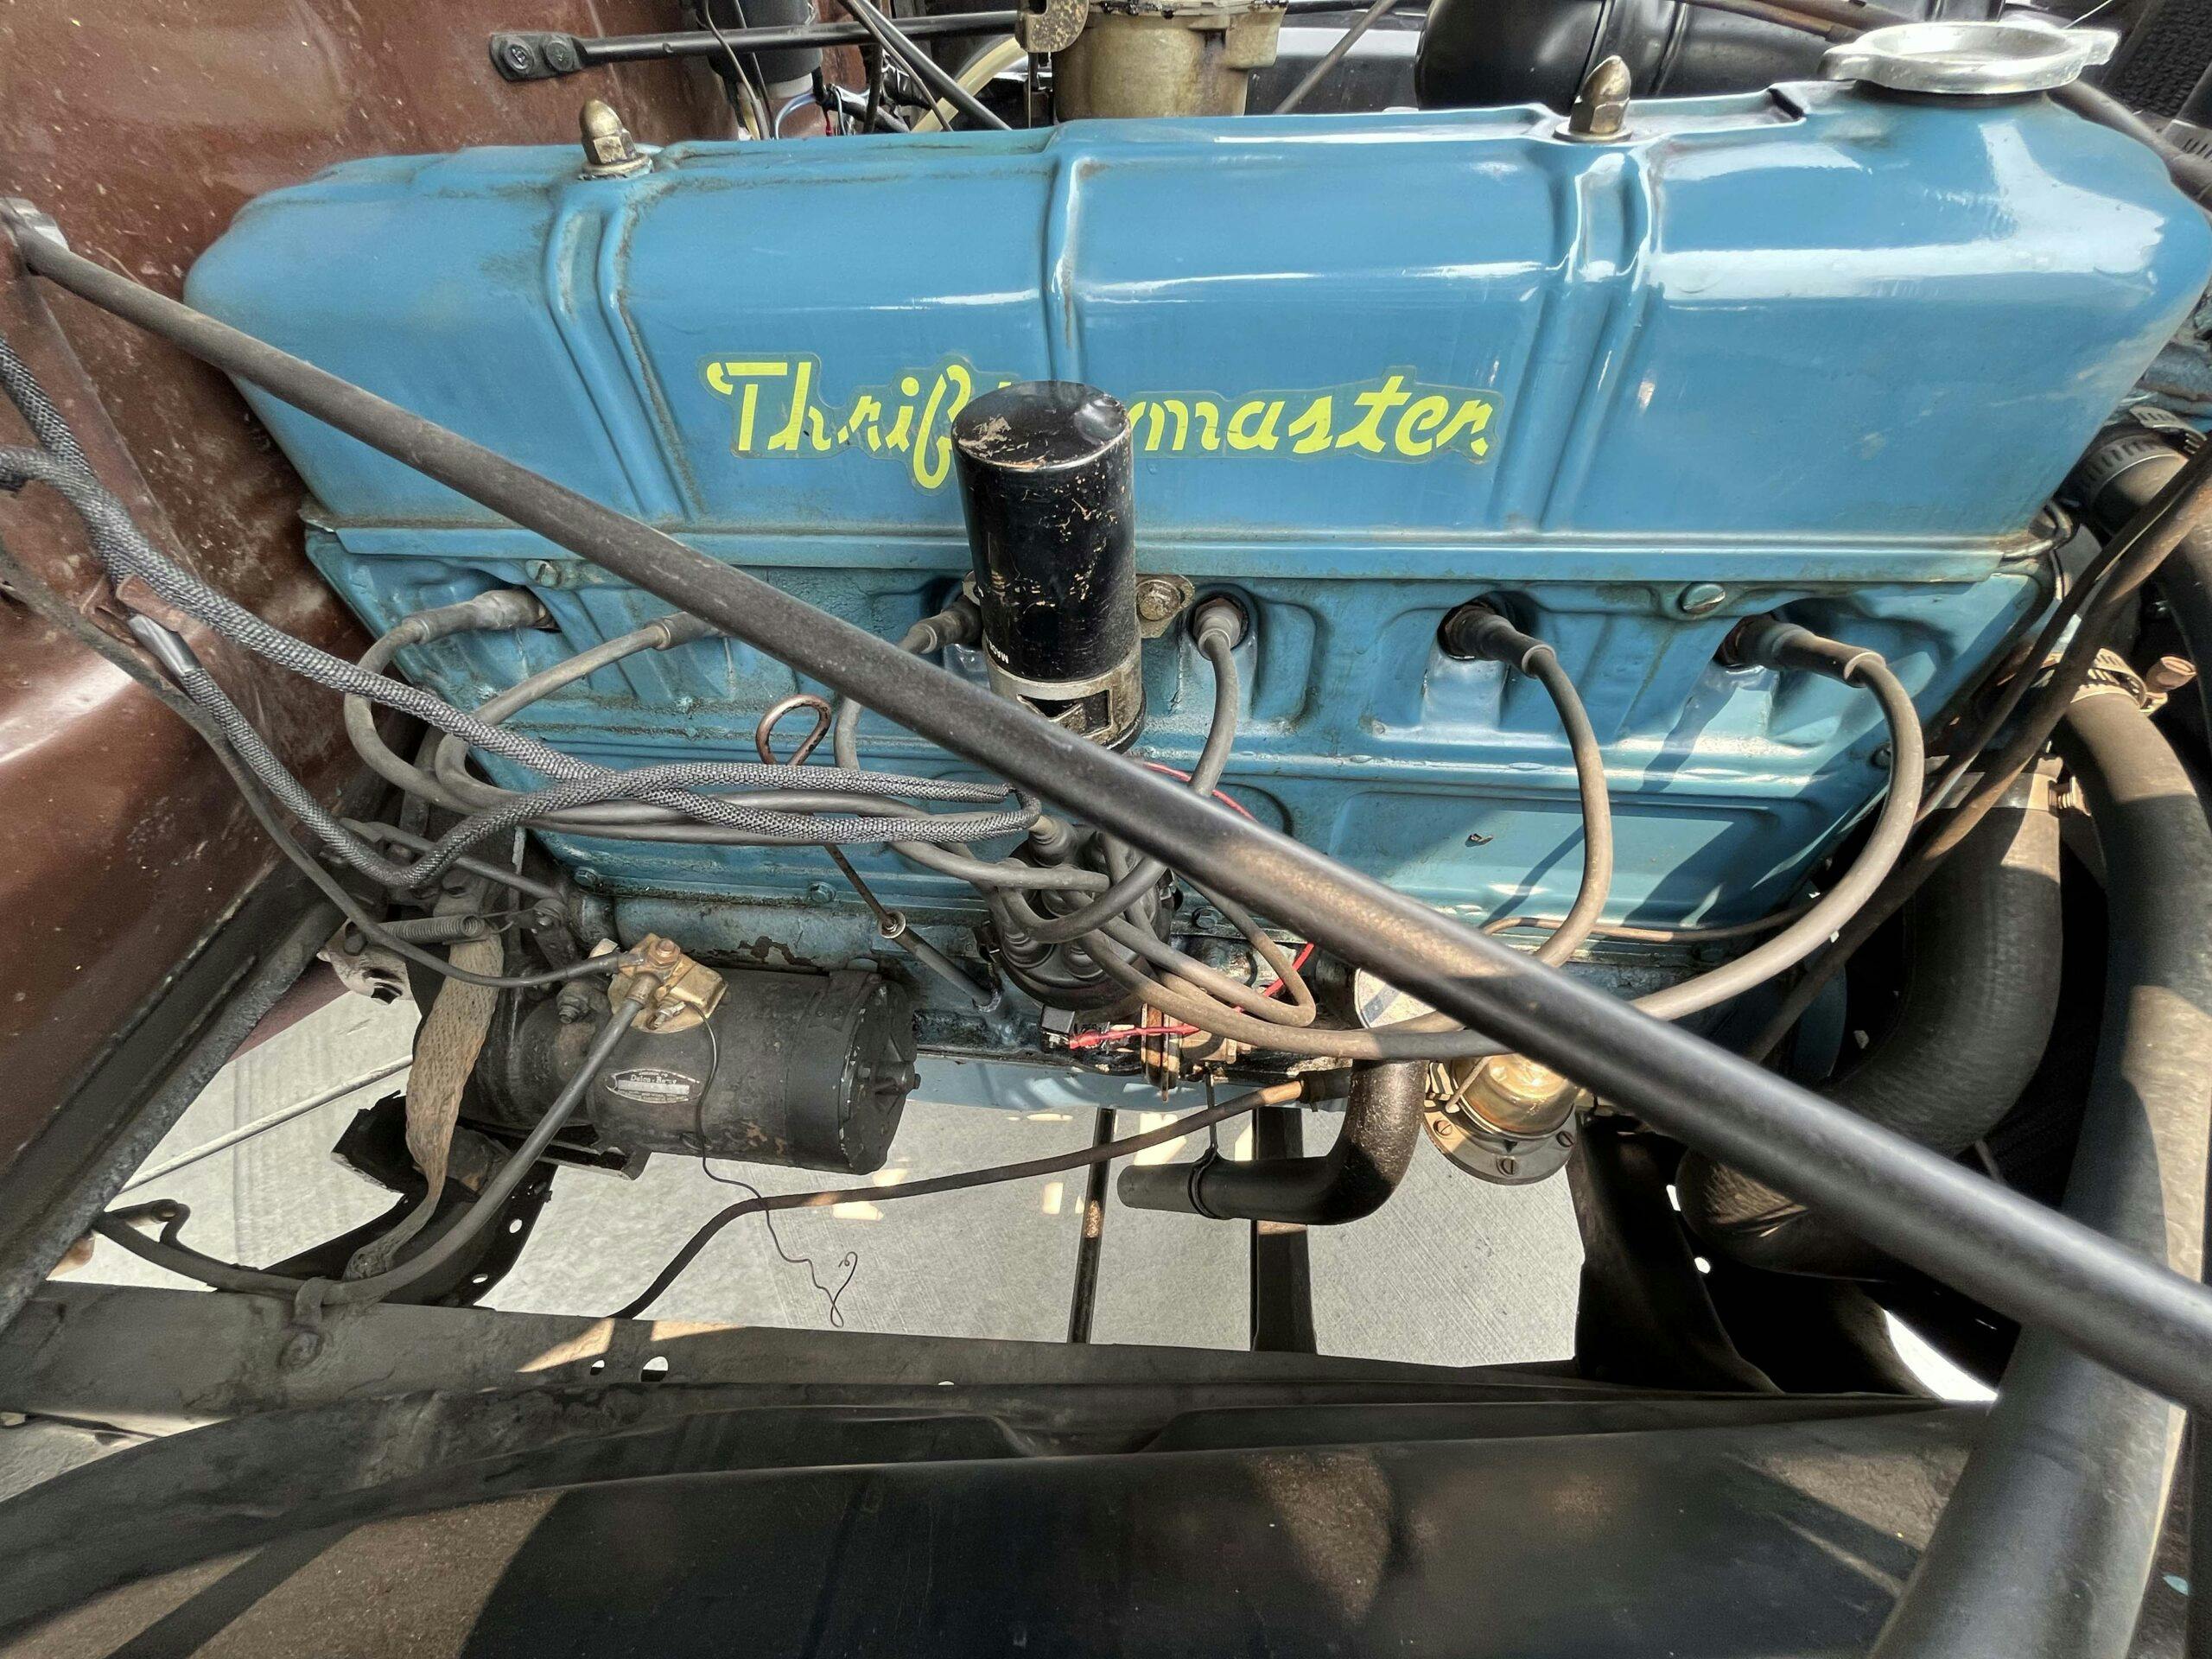 1952 Chevrolet Pickup thriftmaster engine closeup